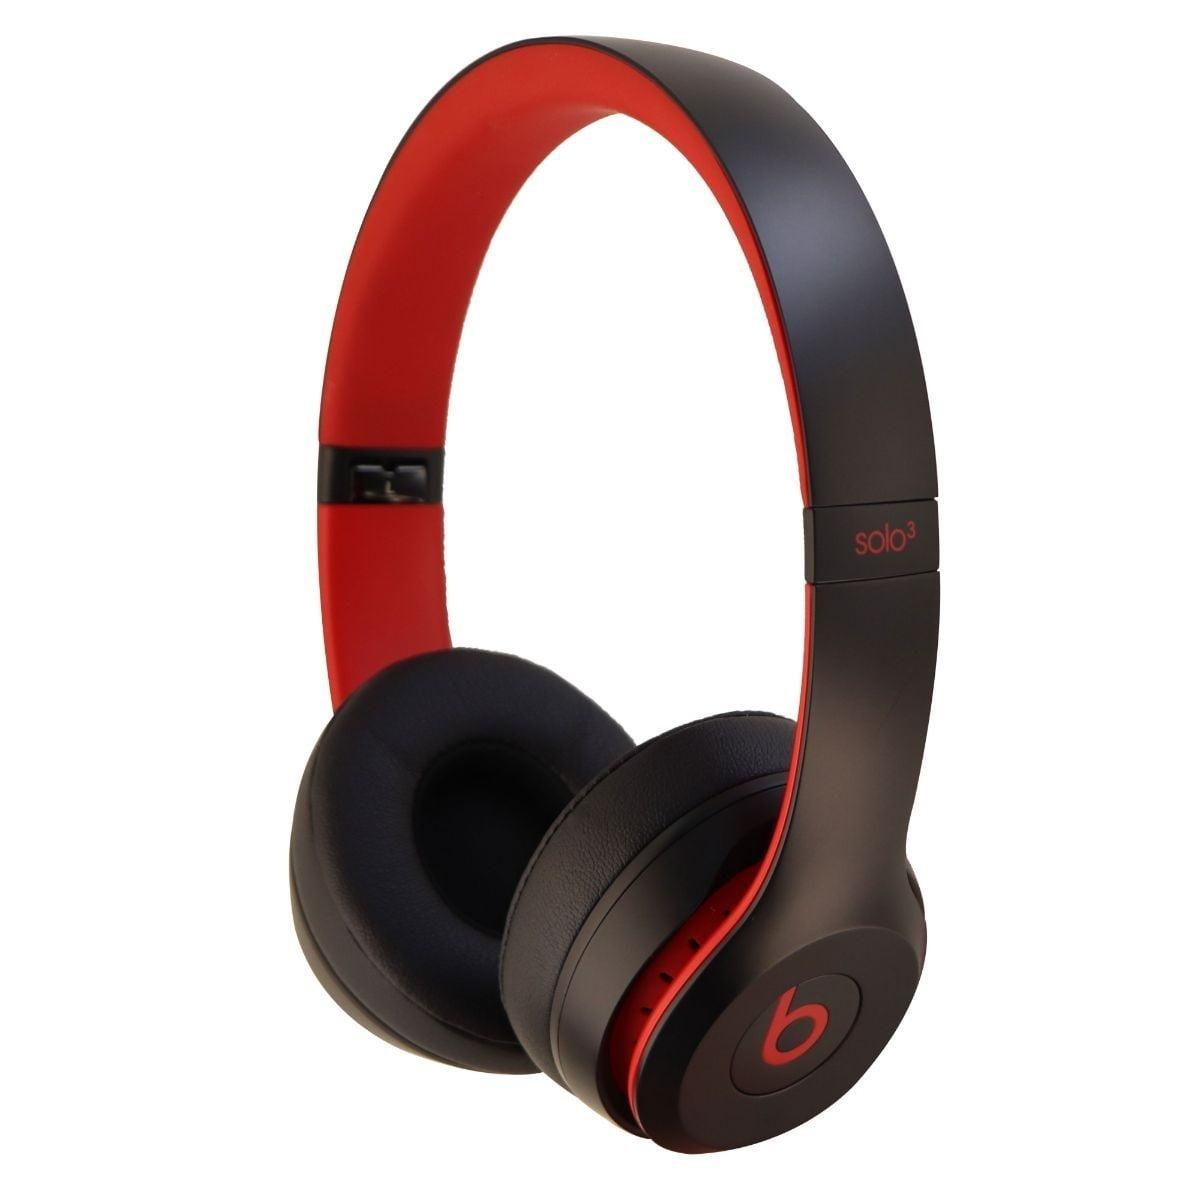 black and red wireless beats headphones